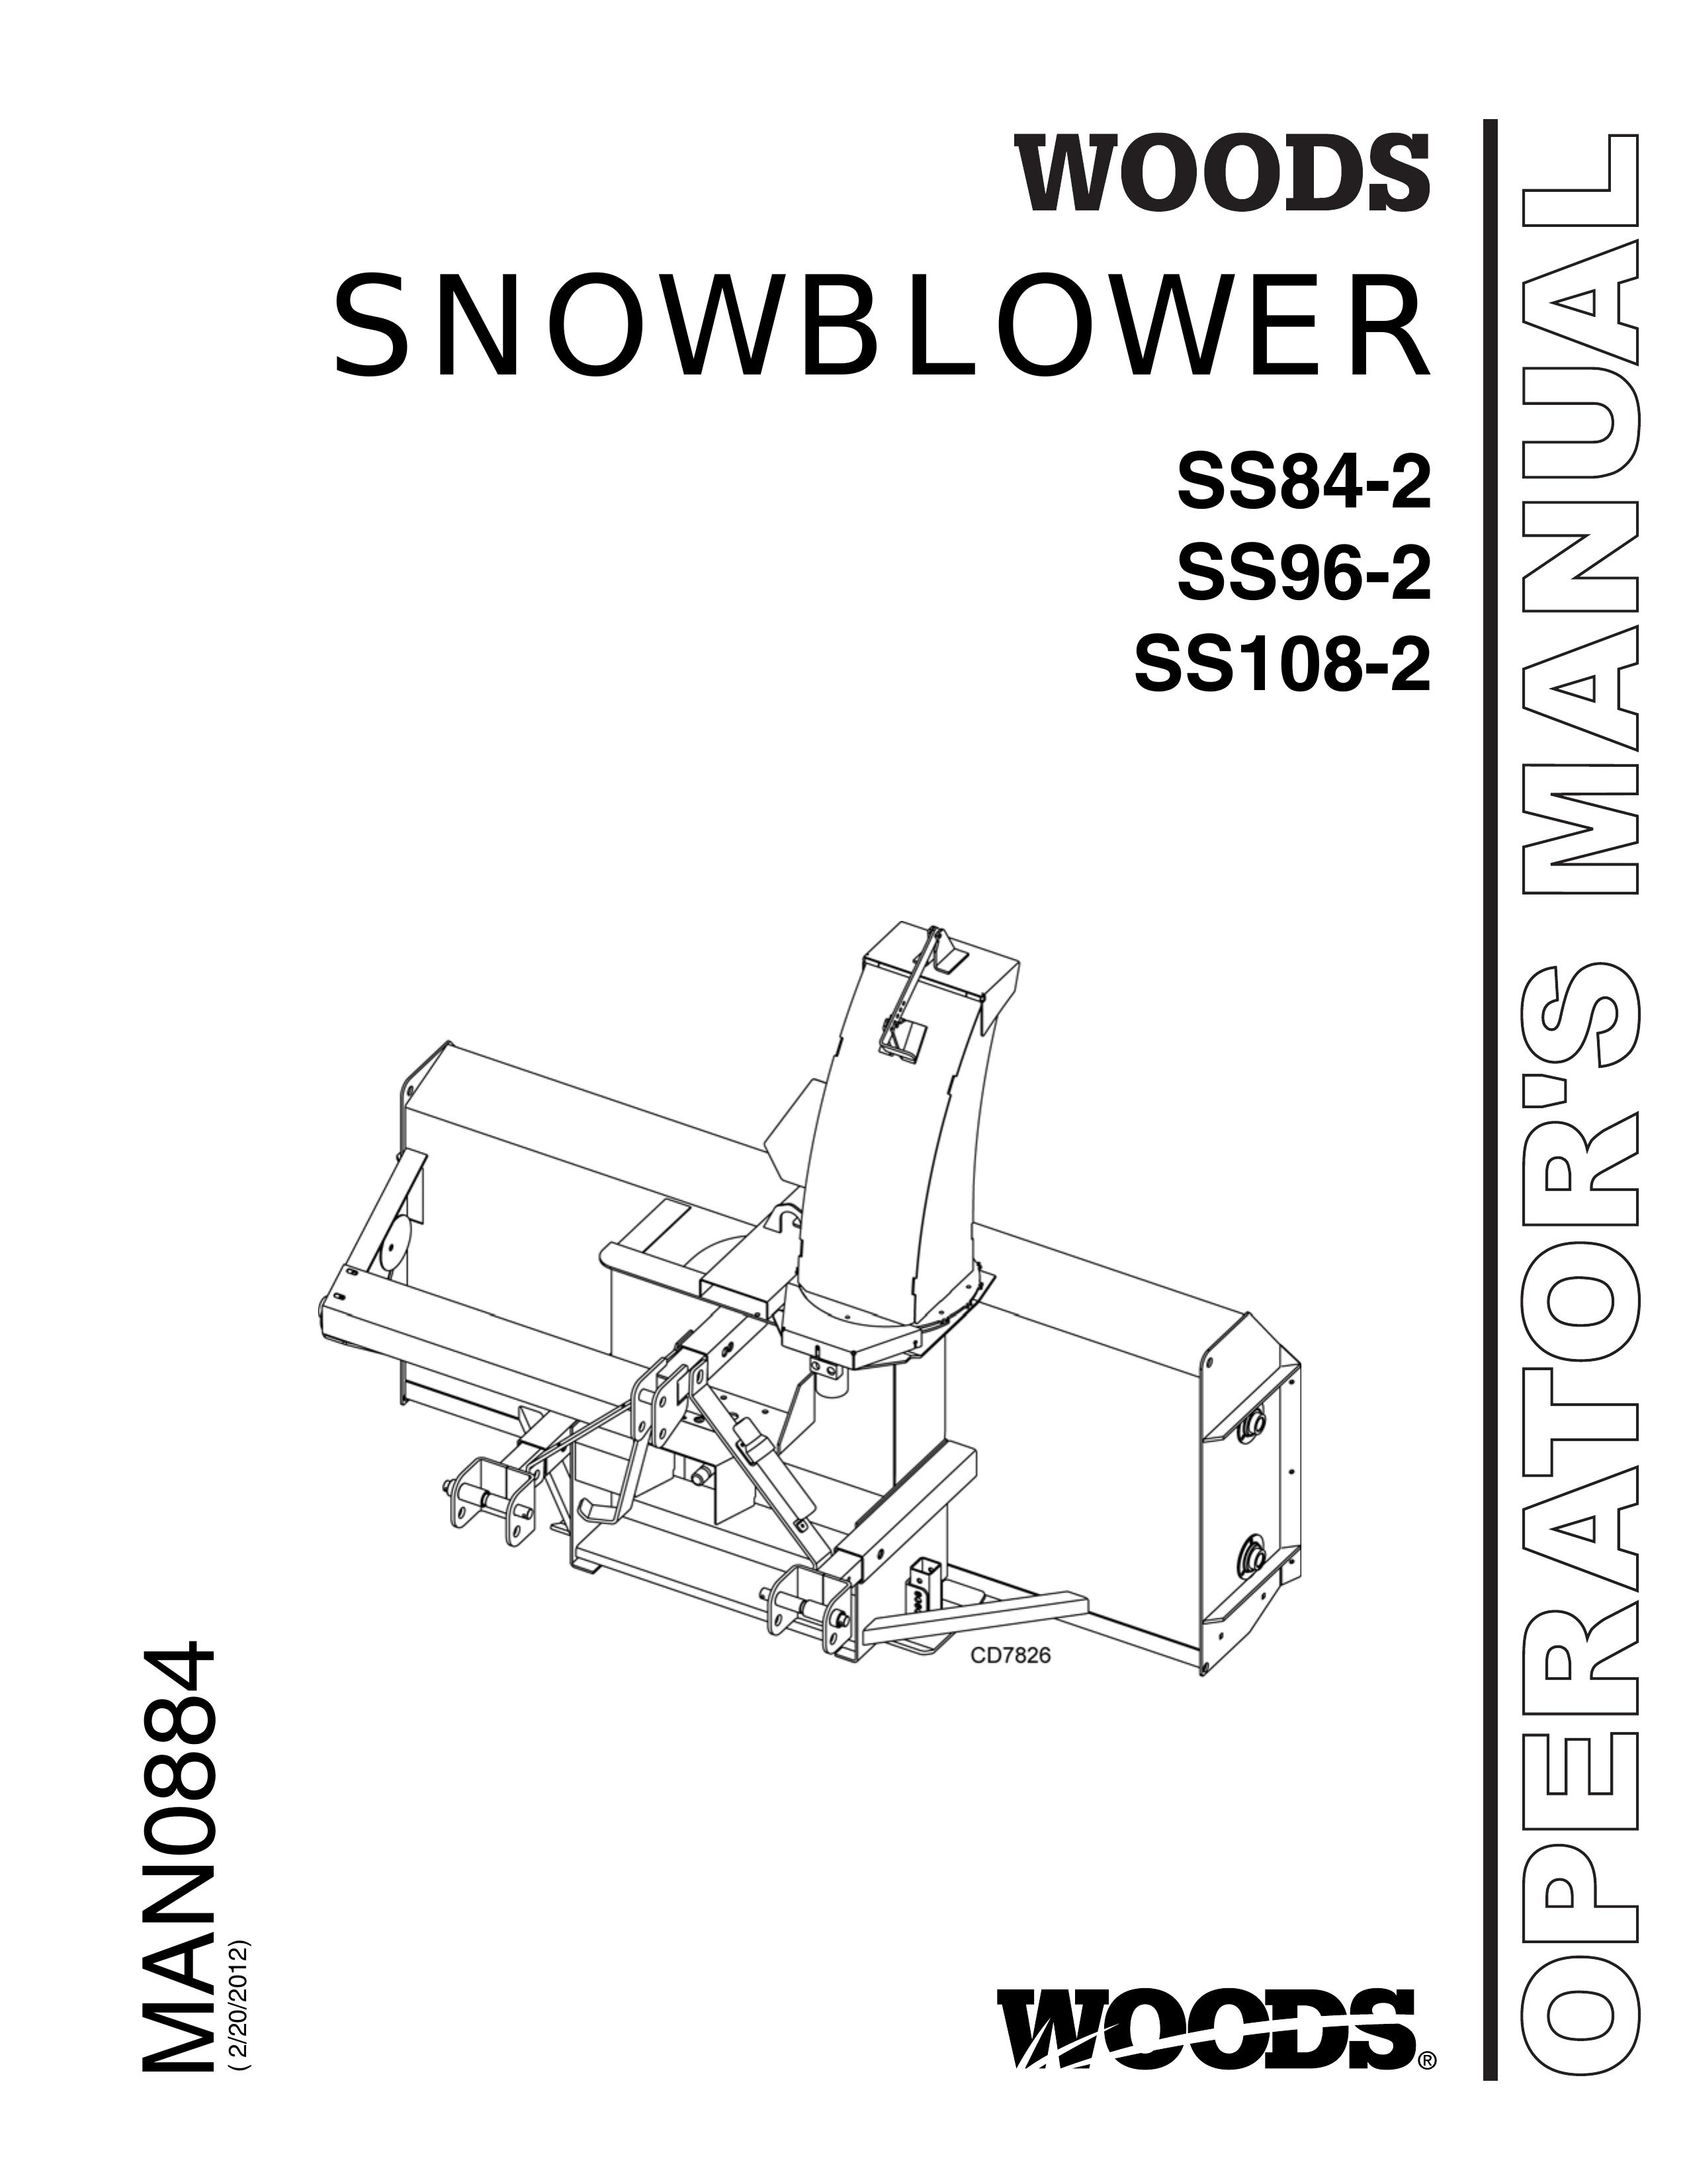 Woods Equipment SS108-2 Snow Blower User Manual